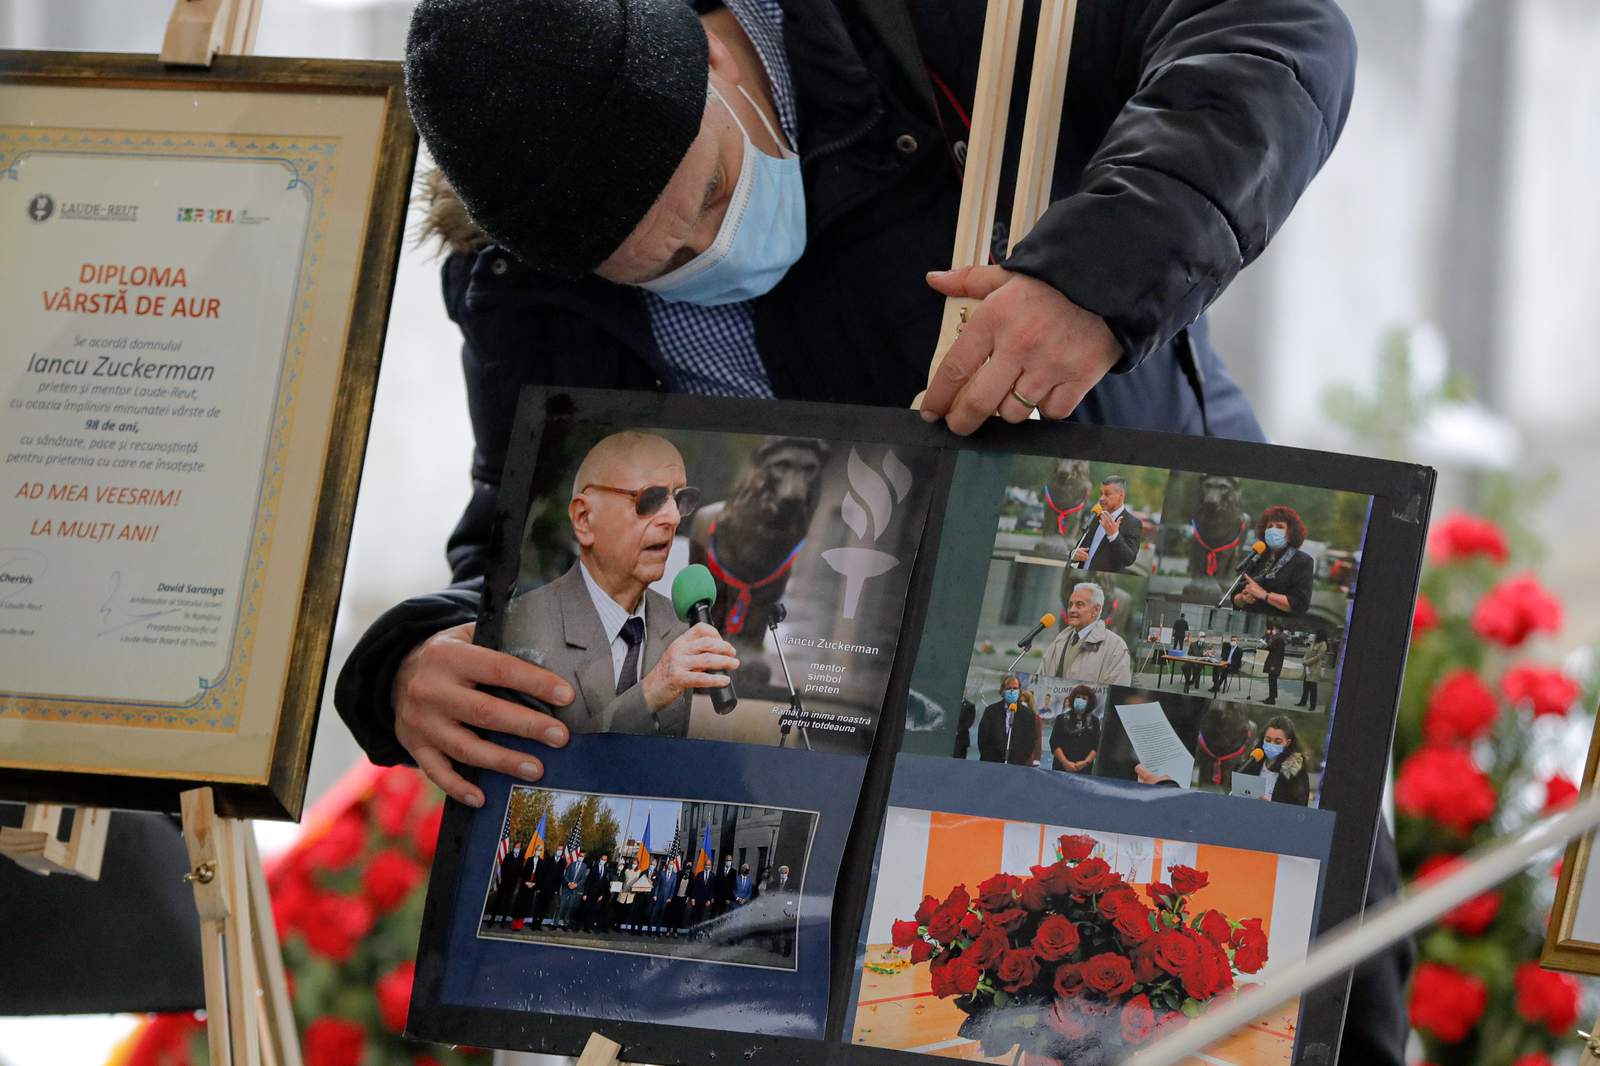 Romania Holocaust survivor Tucarman dies from COVID-19 at 98